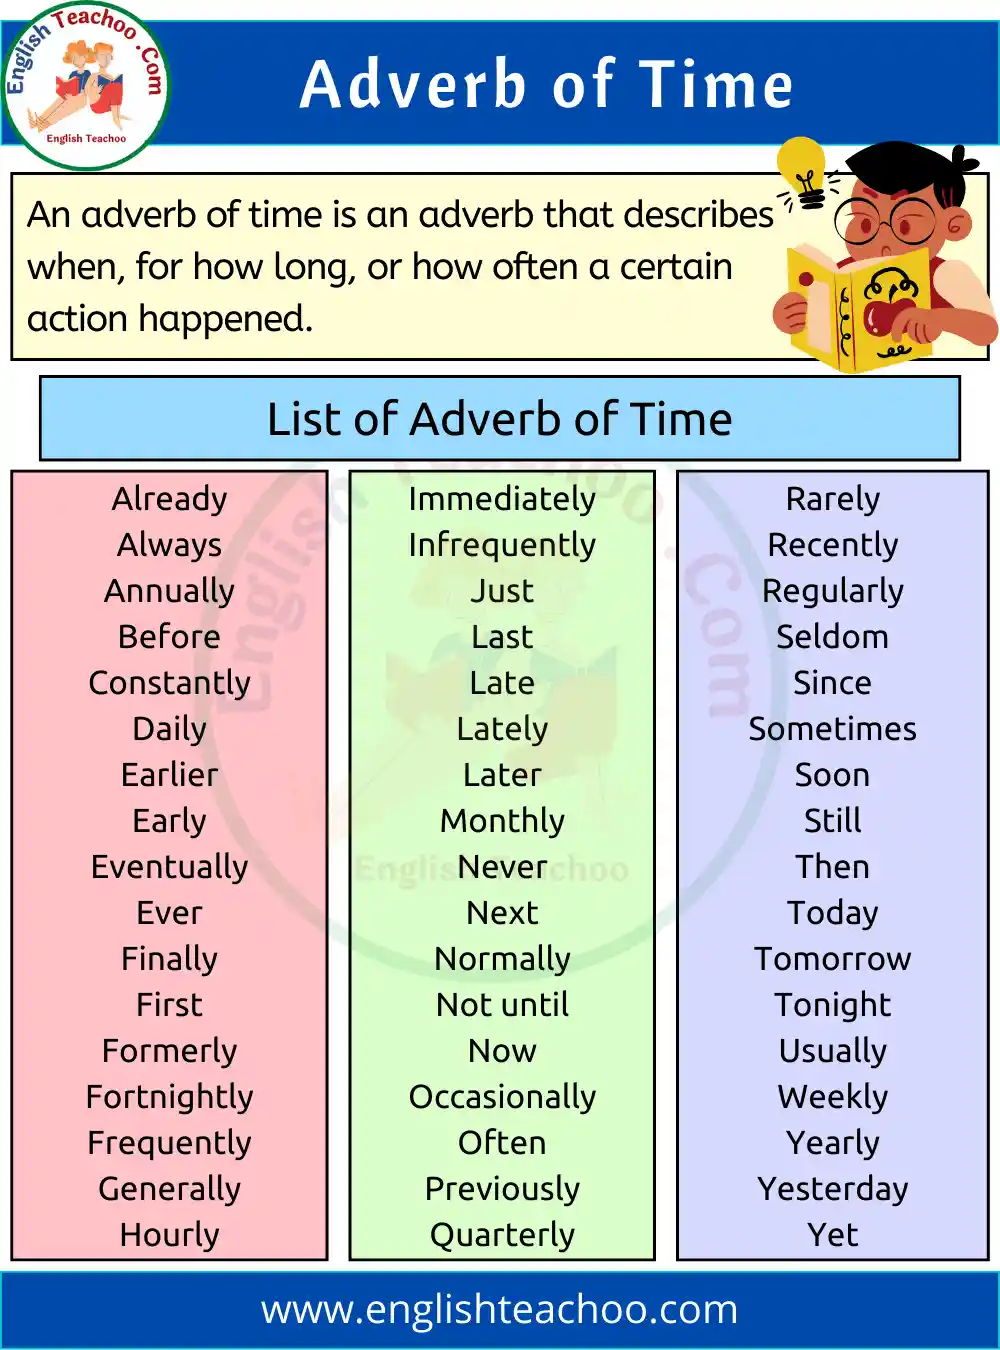 adverb-of-time-examples-in-sentences-englishteachoo